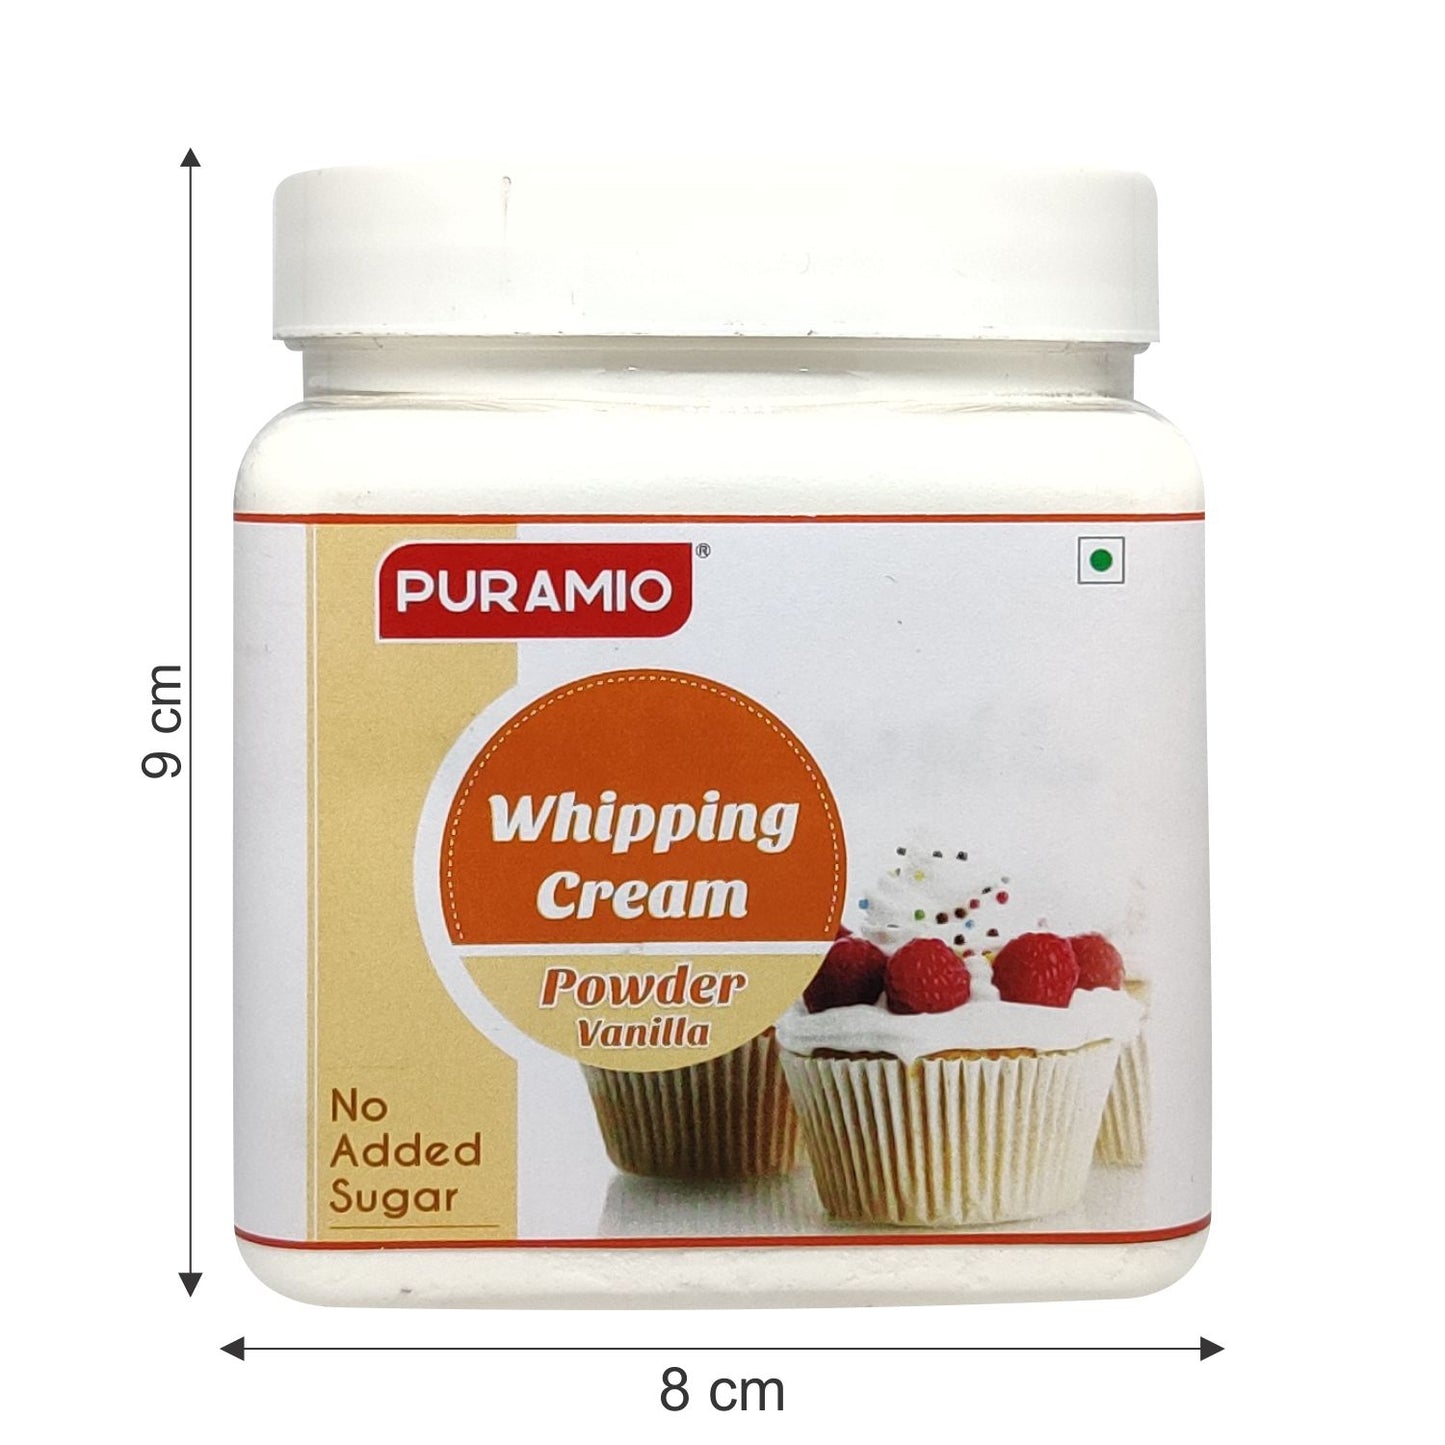 Puramio Whipping Cream Powder Vanilla (No Added Sugar)